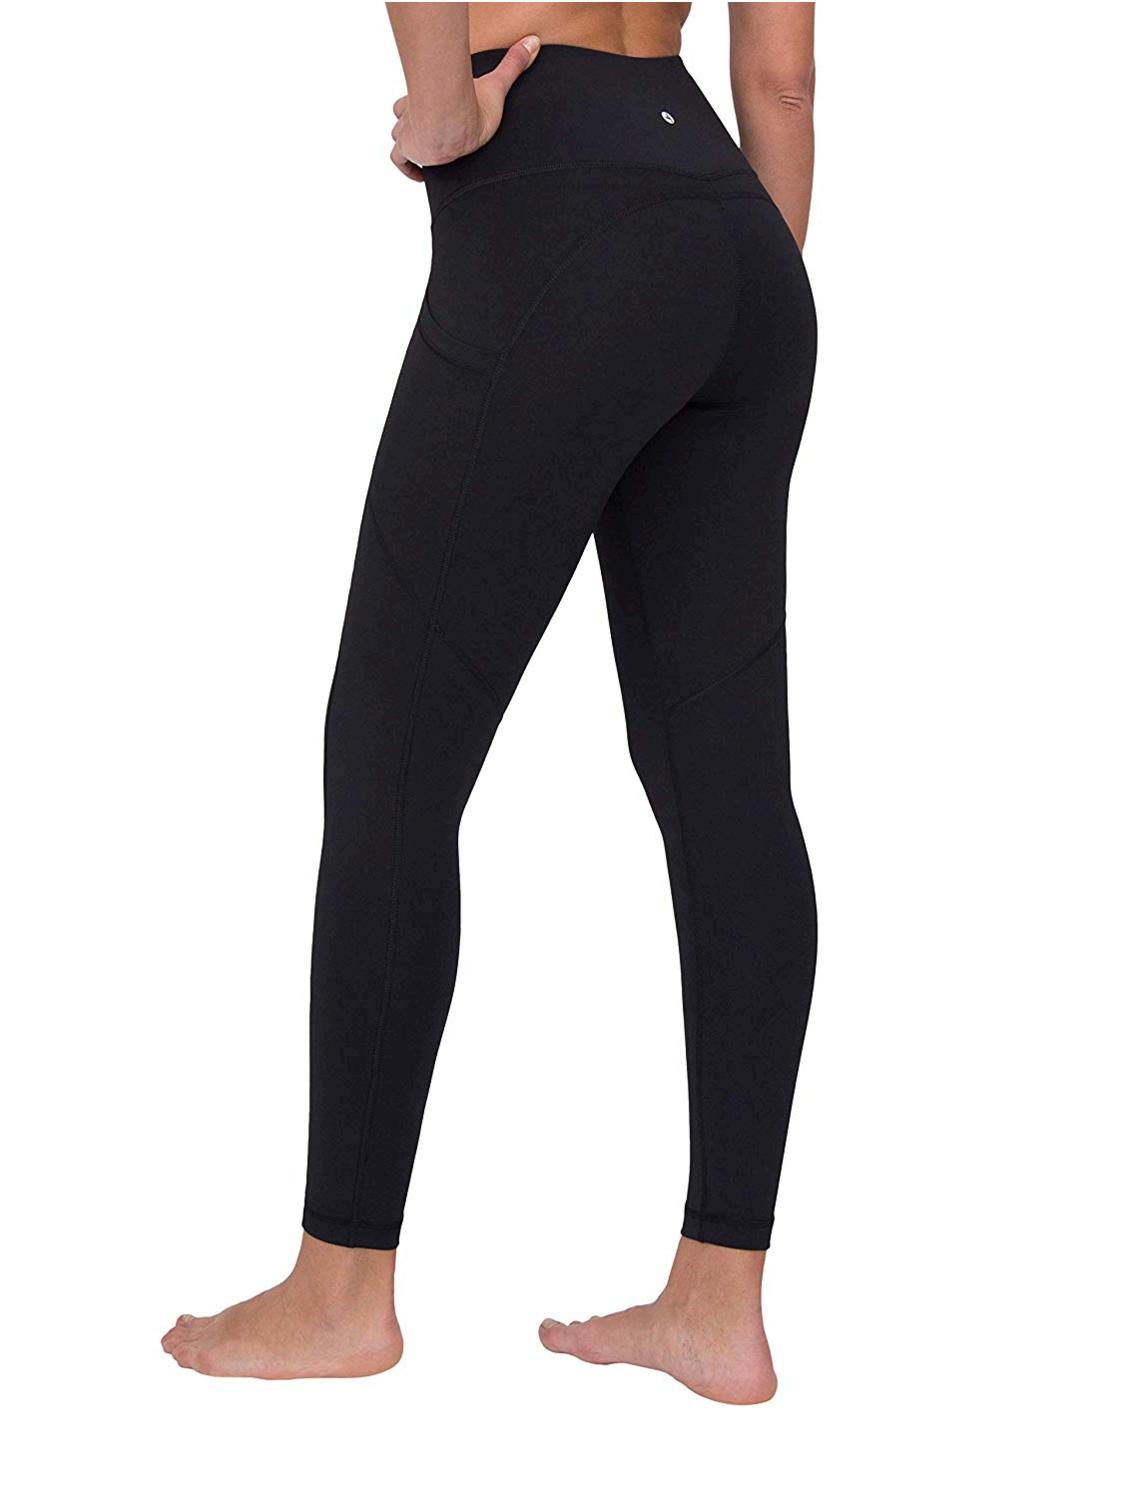 90 Degree By Reflex High Waist Interlink Yoga Pants -, Black 2019, Size ...